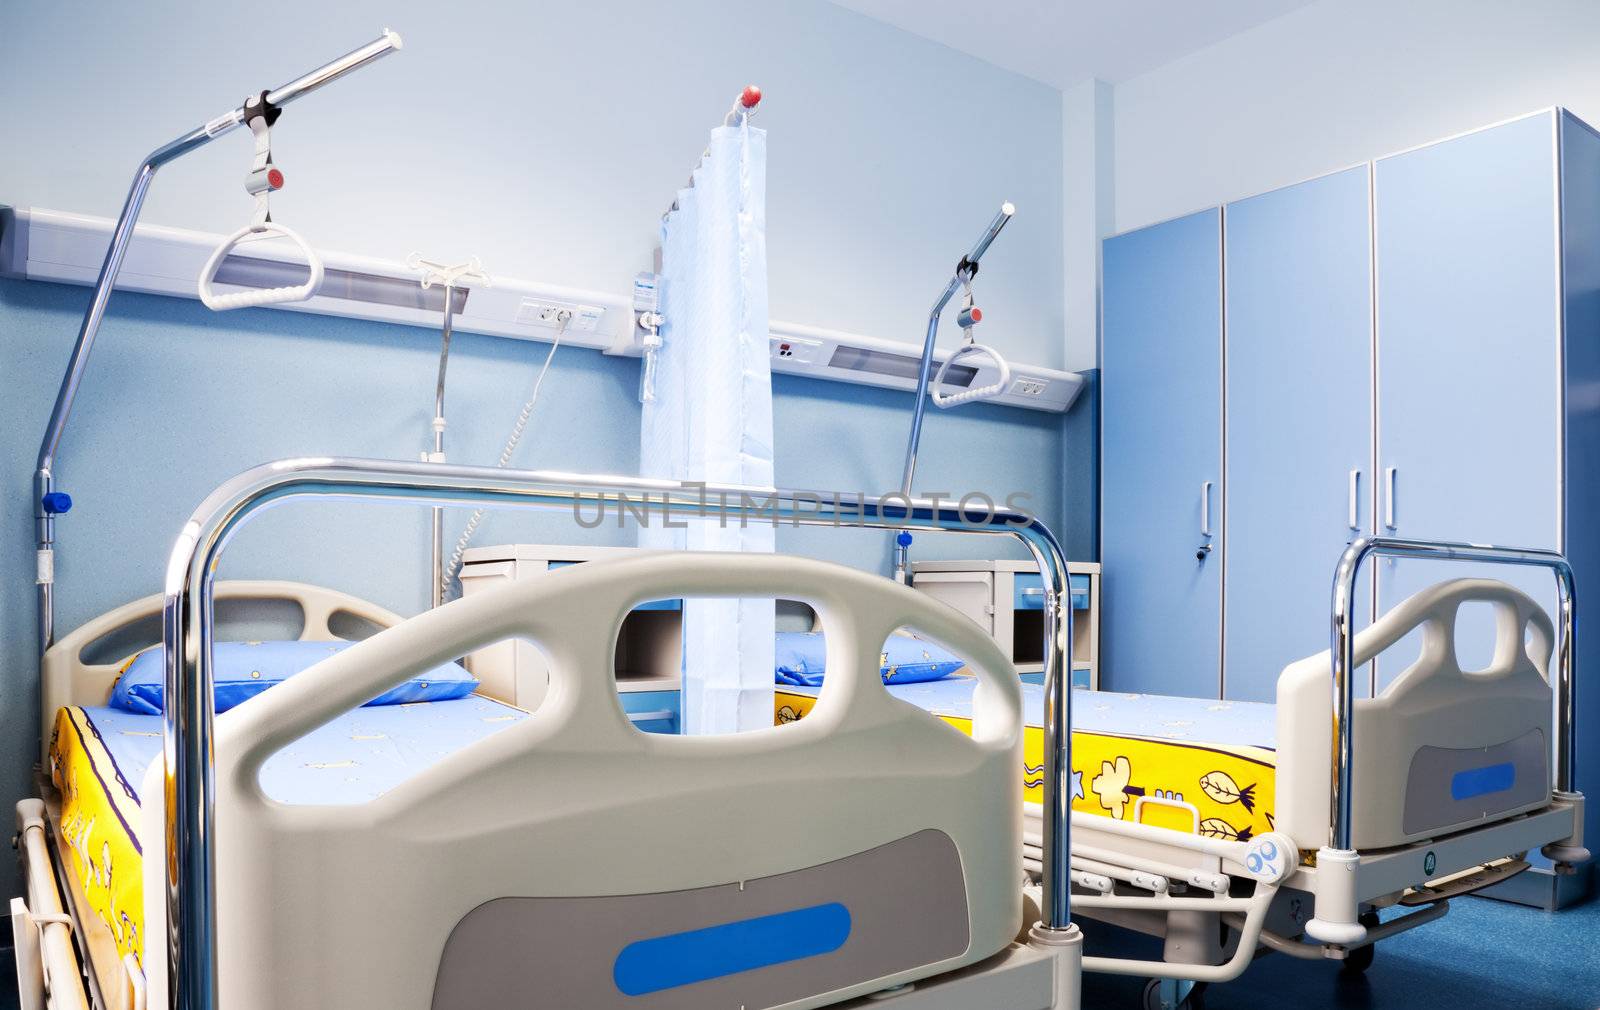 hospital room rehabilitation beds by vilevi